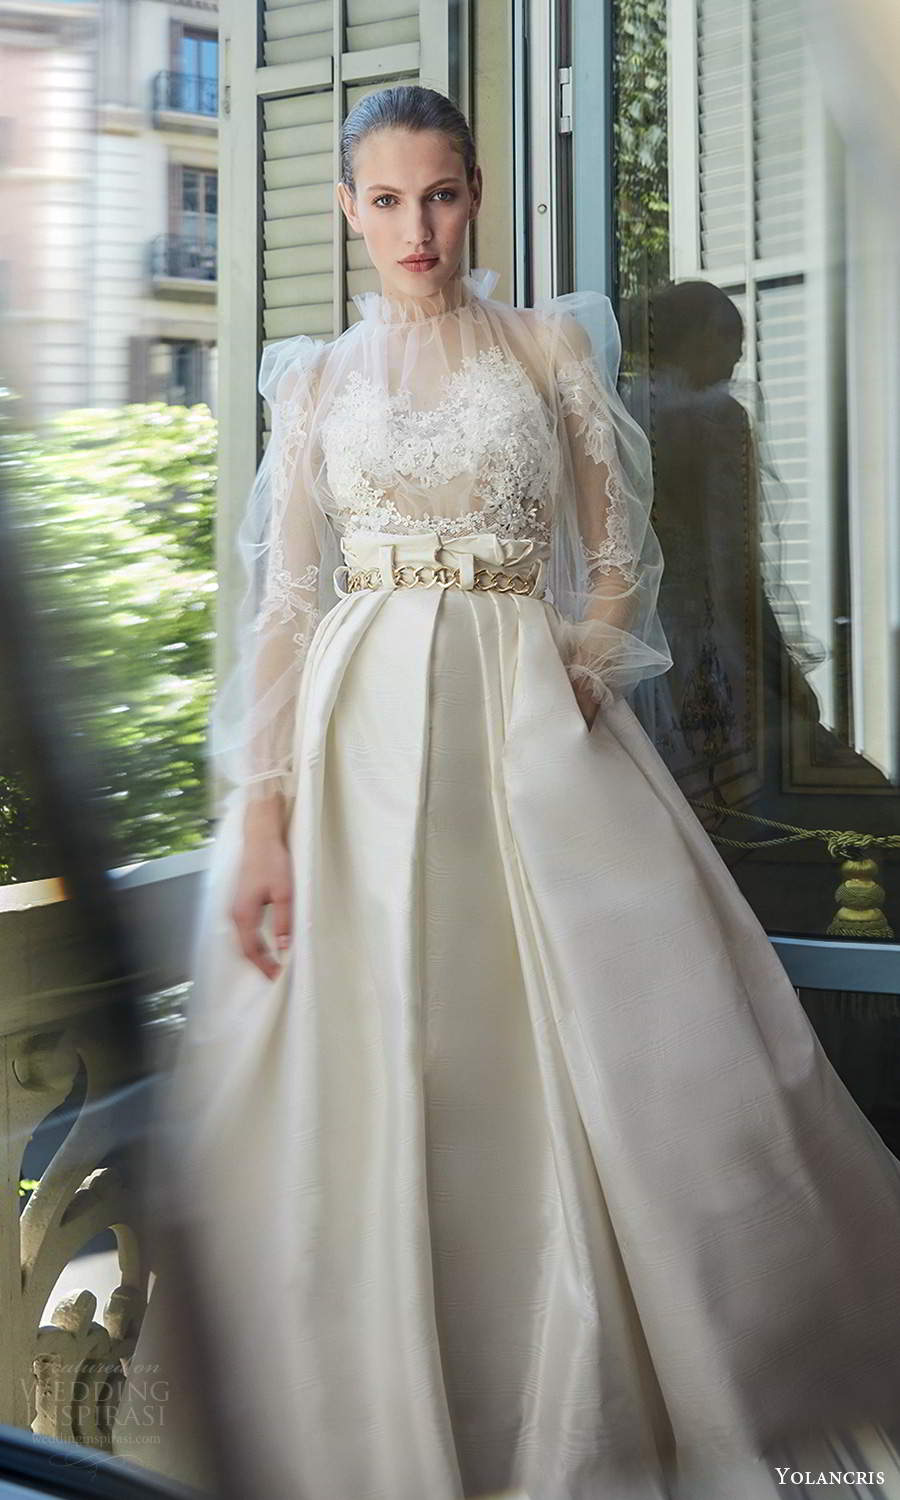 yolancris 2020 bridal couture sheer bishop sleeves high ruff neckline embellished bodice a line ball gown wedding dress (14) mv